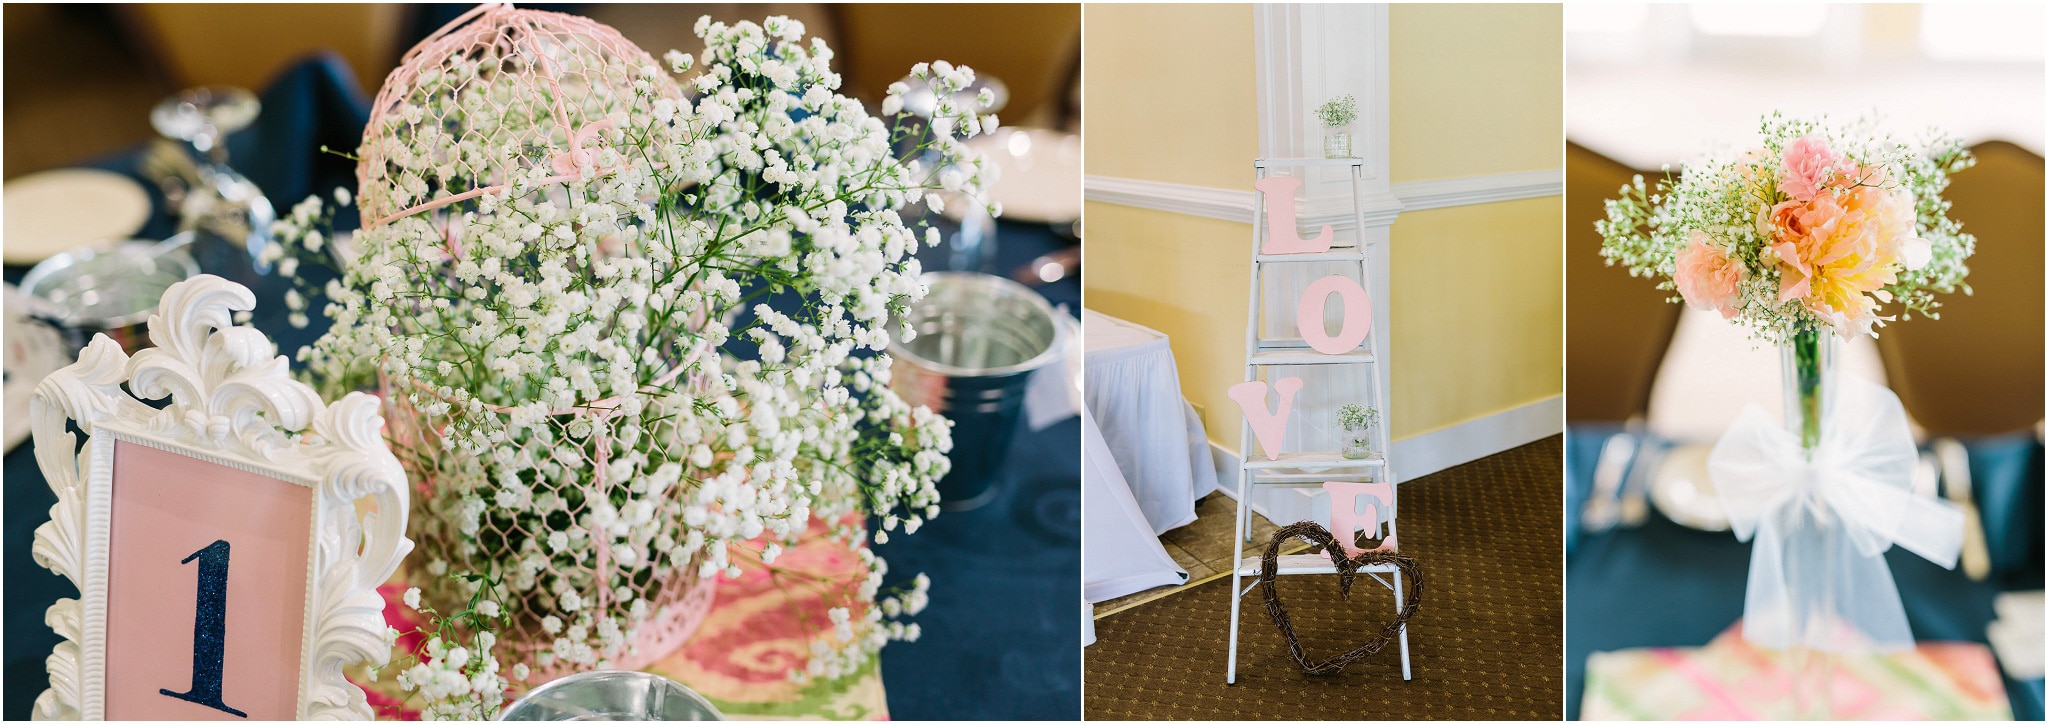 Reception set up details, centerpieces and flowers